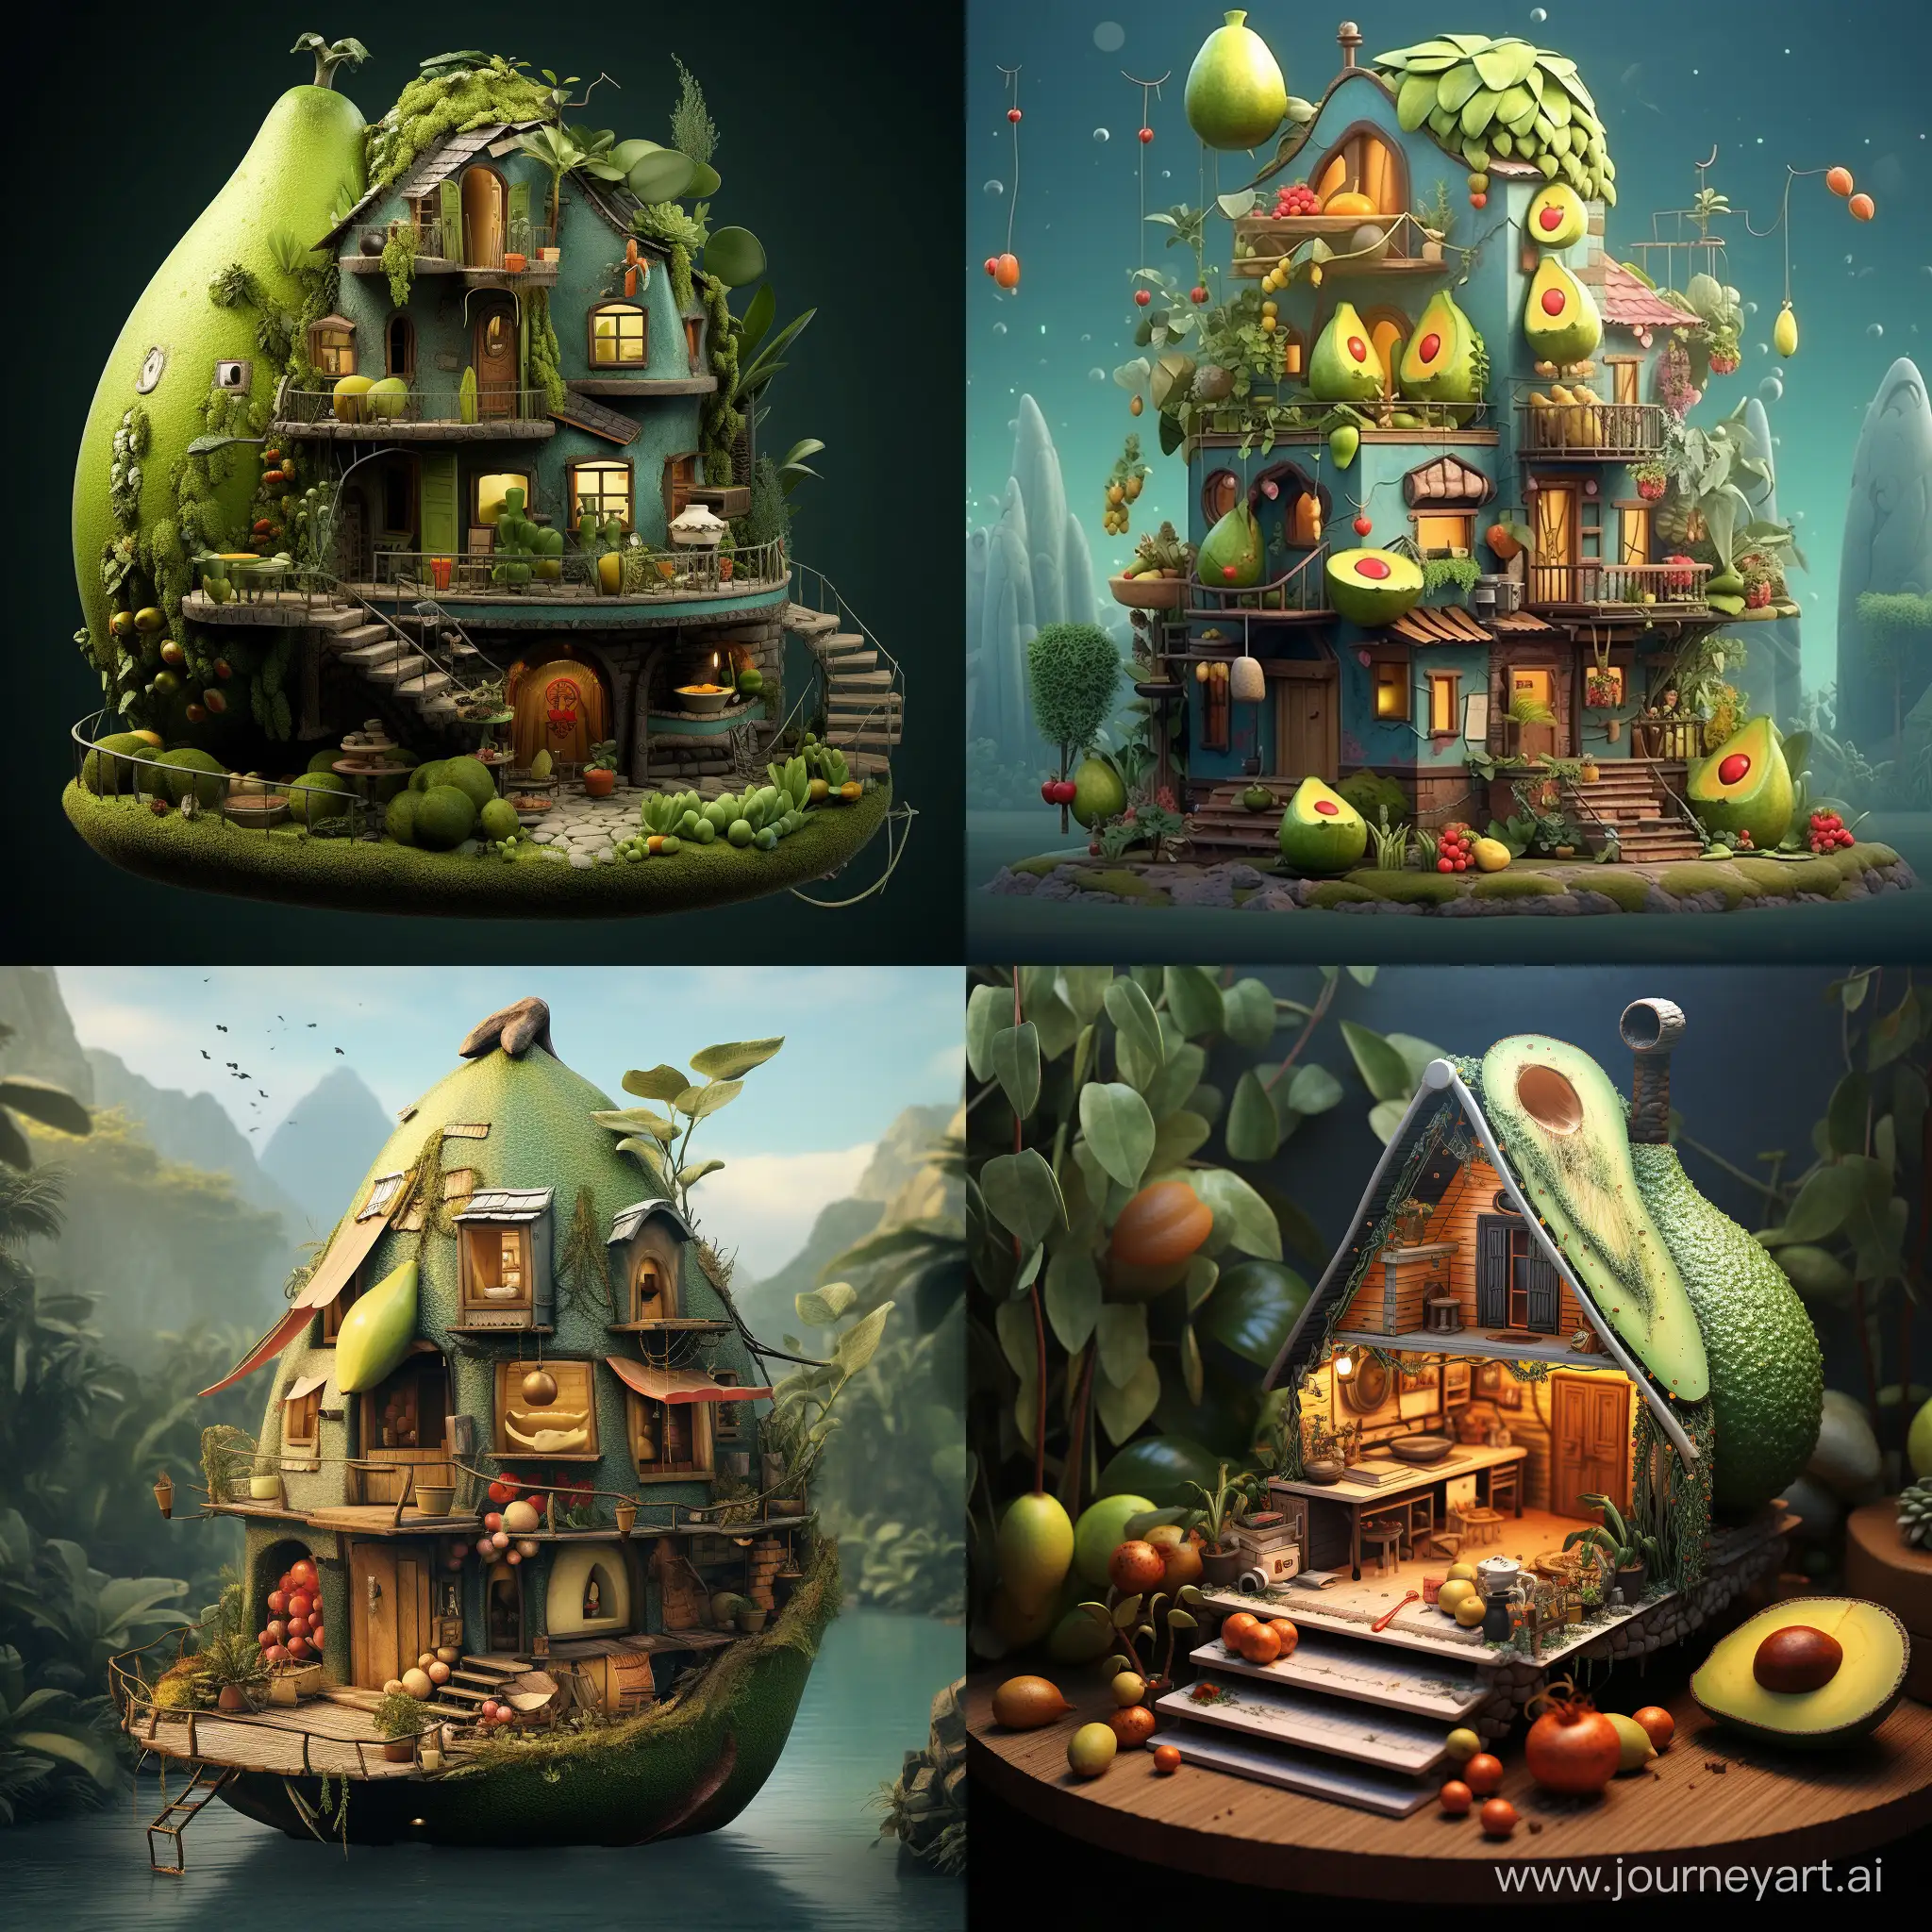 Serkan-Bolat-and-Avocado-House-Art-Captivating-Portrait-with-Unique-Avocado-Dwelling